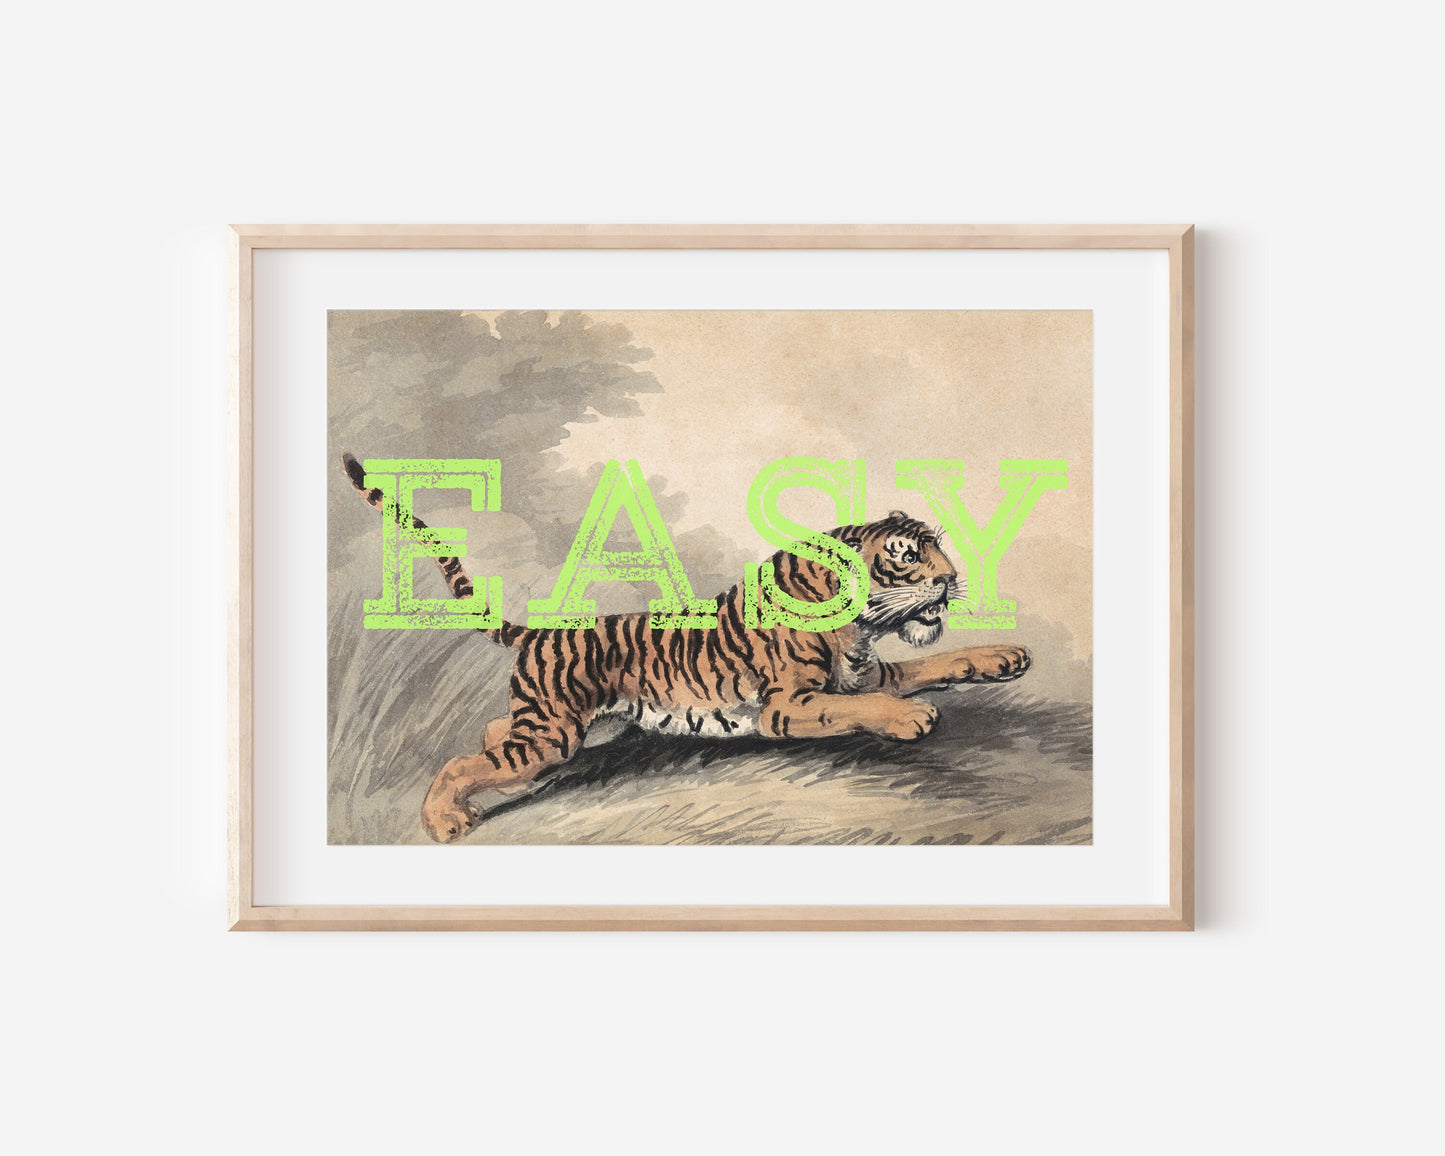 Easy Tiger Print, Tiger Print, Easy Tiger Wall Art, Hallway Prints, Living Room Decor, Quote Prints, Animal Prints, Retro Prints